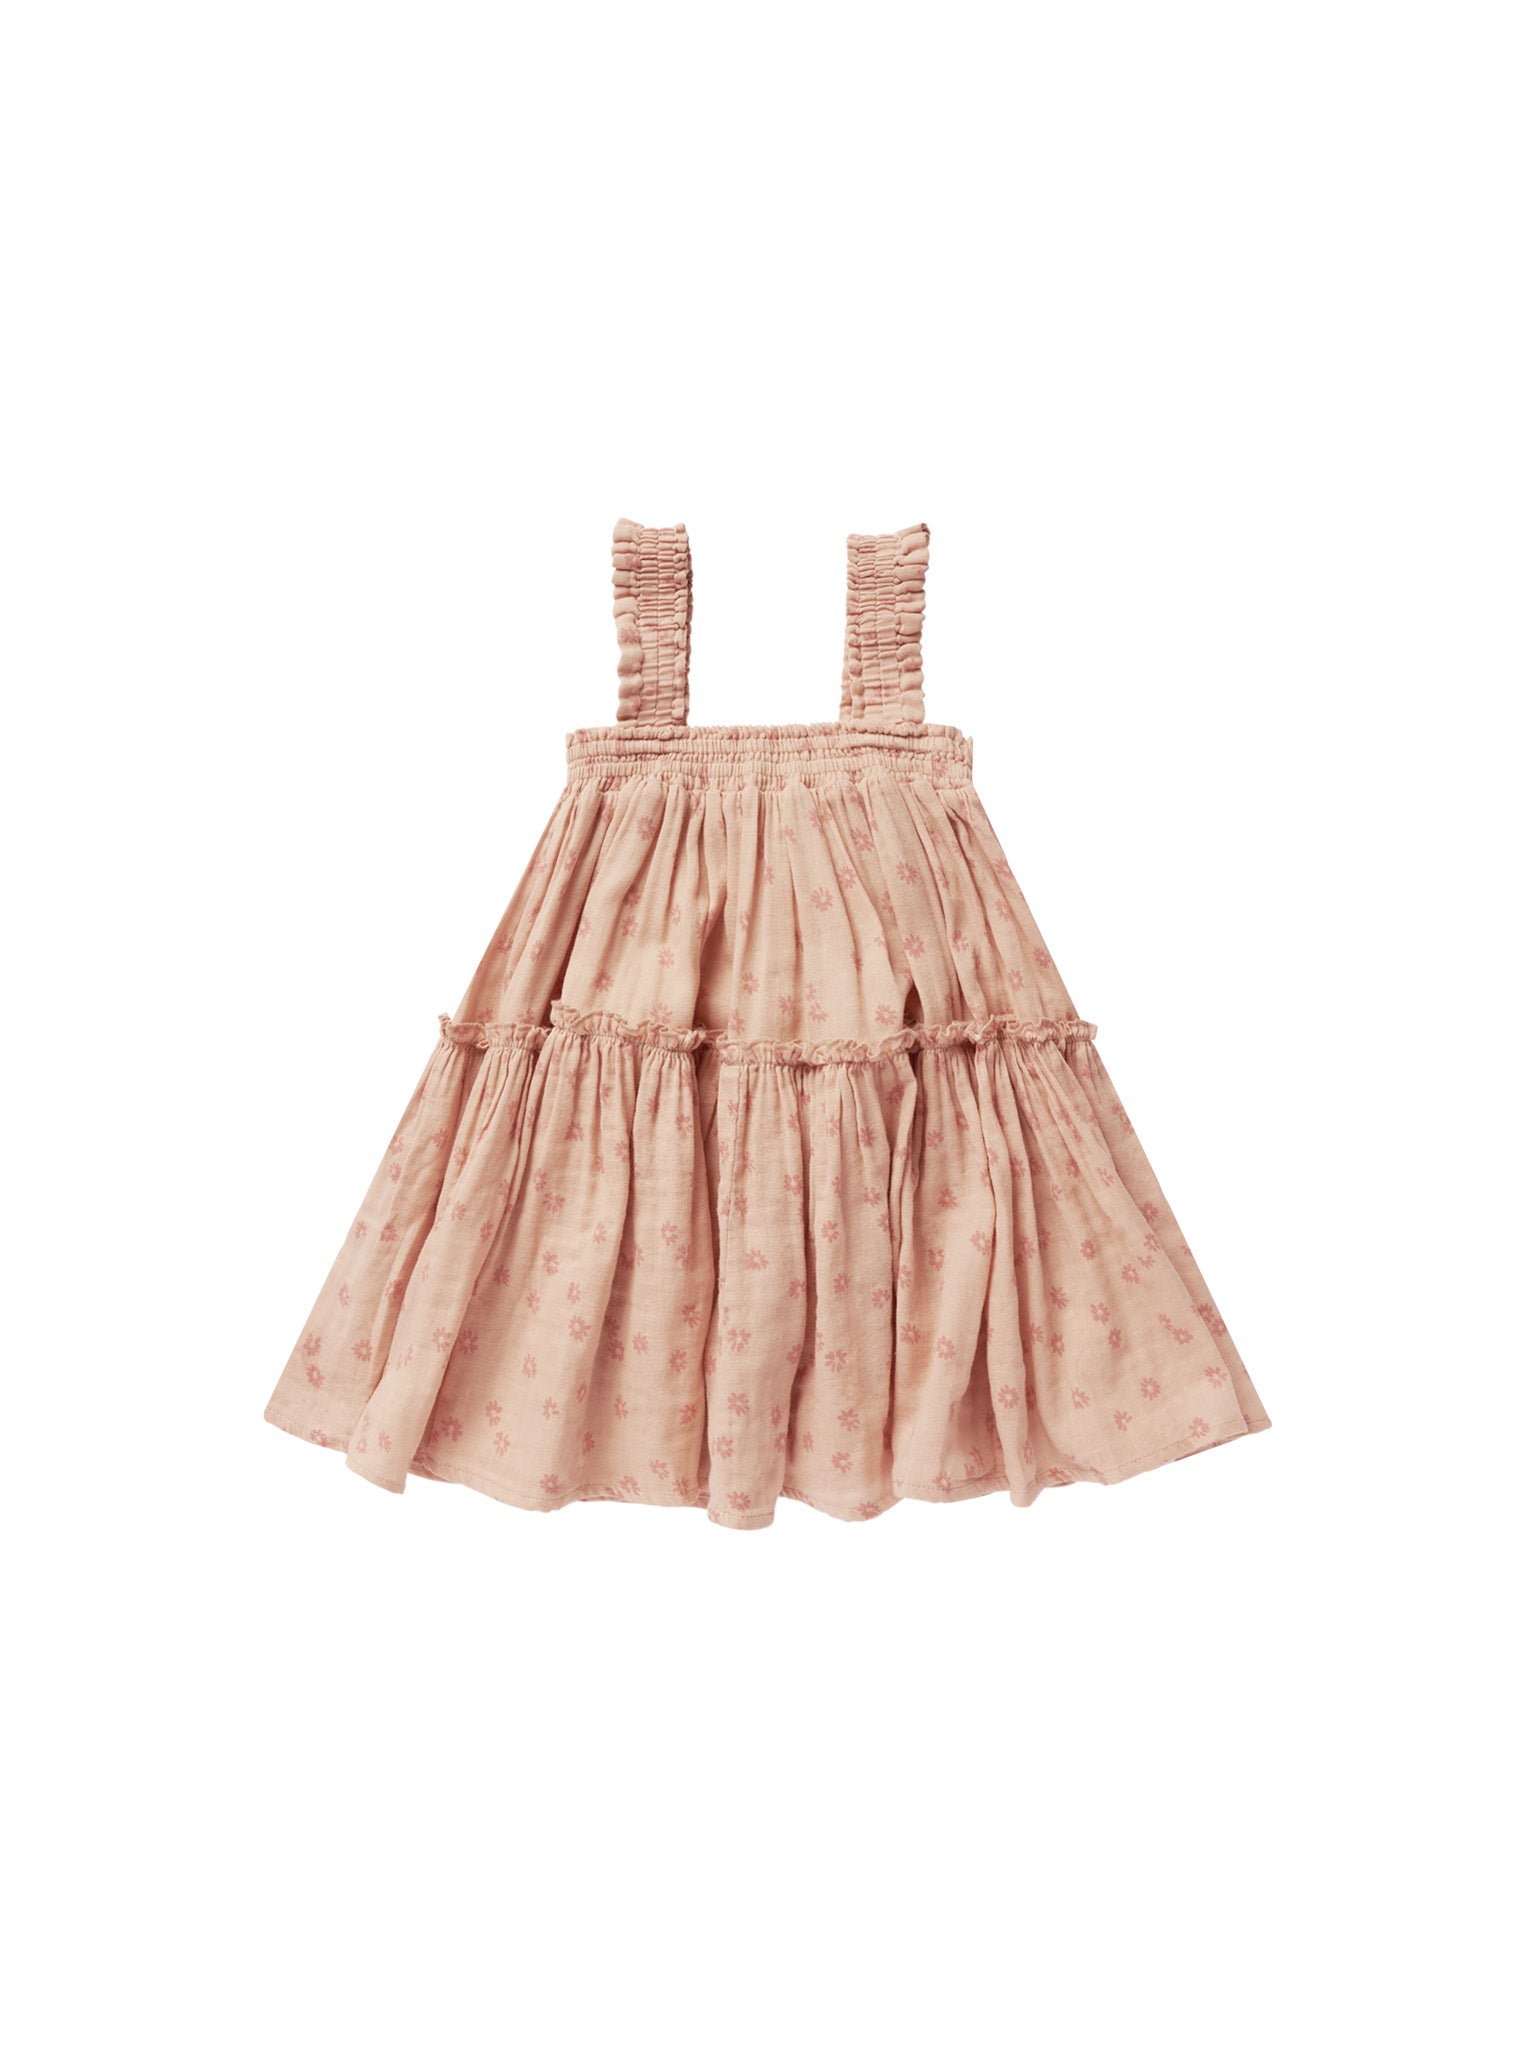 Rylee + Cru Cicily Dress | Pink Daisy